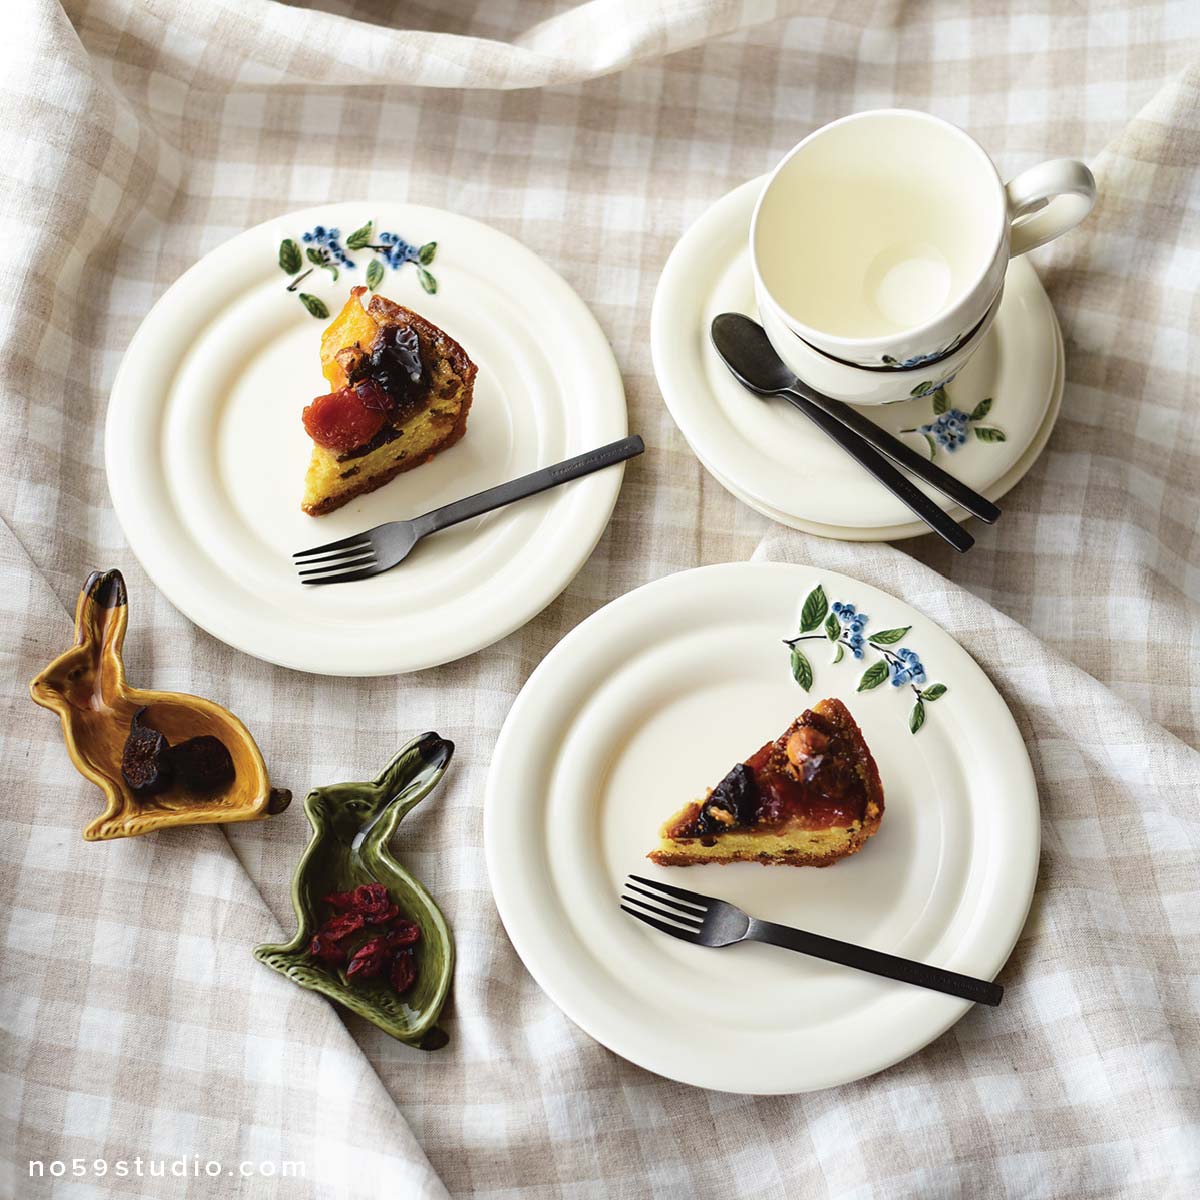 Blueberry Mirtille Tea Cup and Saucer Set